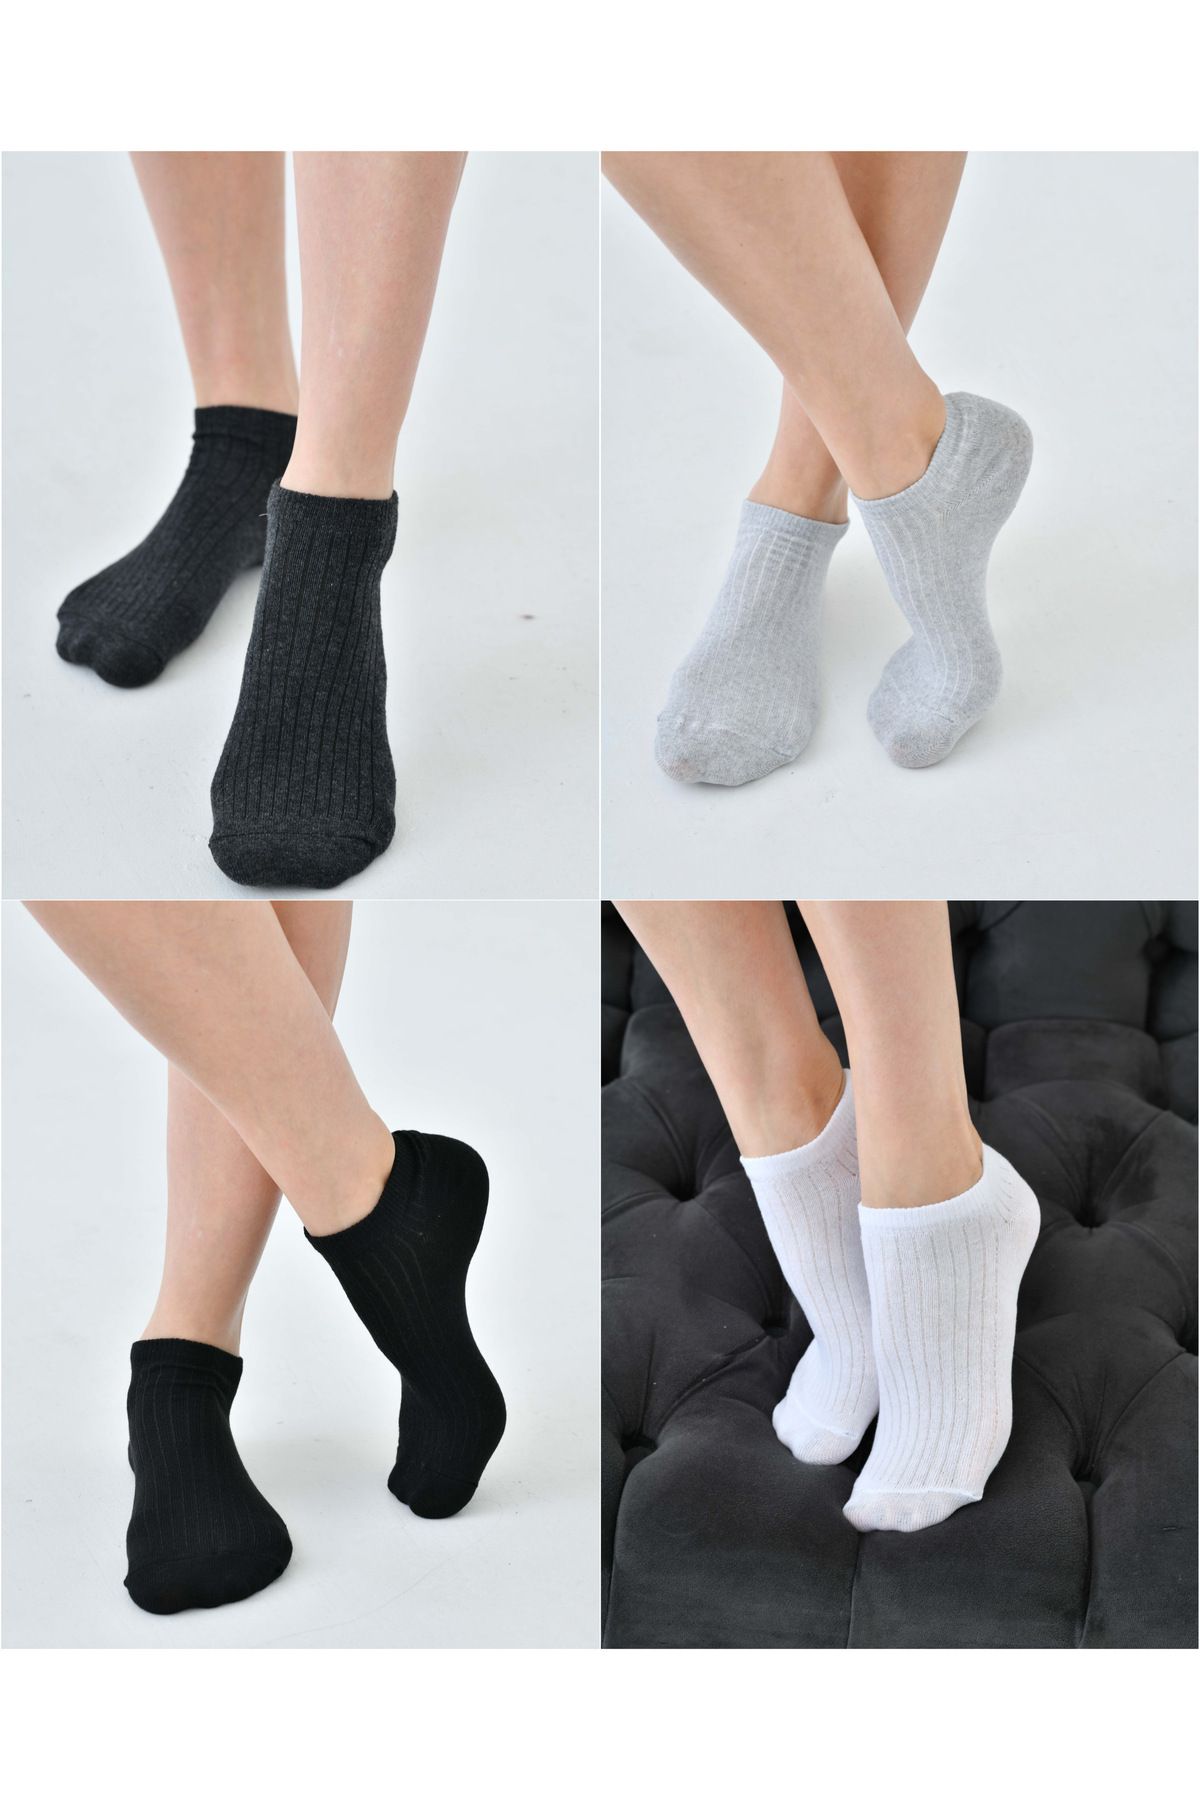 mirach 4’lü Set Derbili Kısa Patik Bilek Boy Çorap Gri Füme Beyaz Siyah Ekonomik Çizgili Pamuklu Esnek